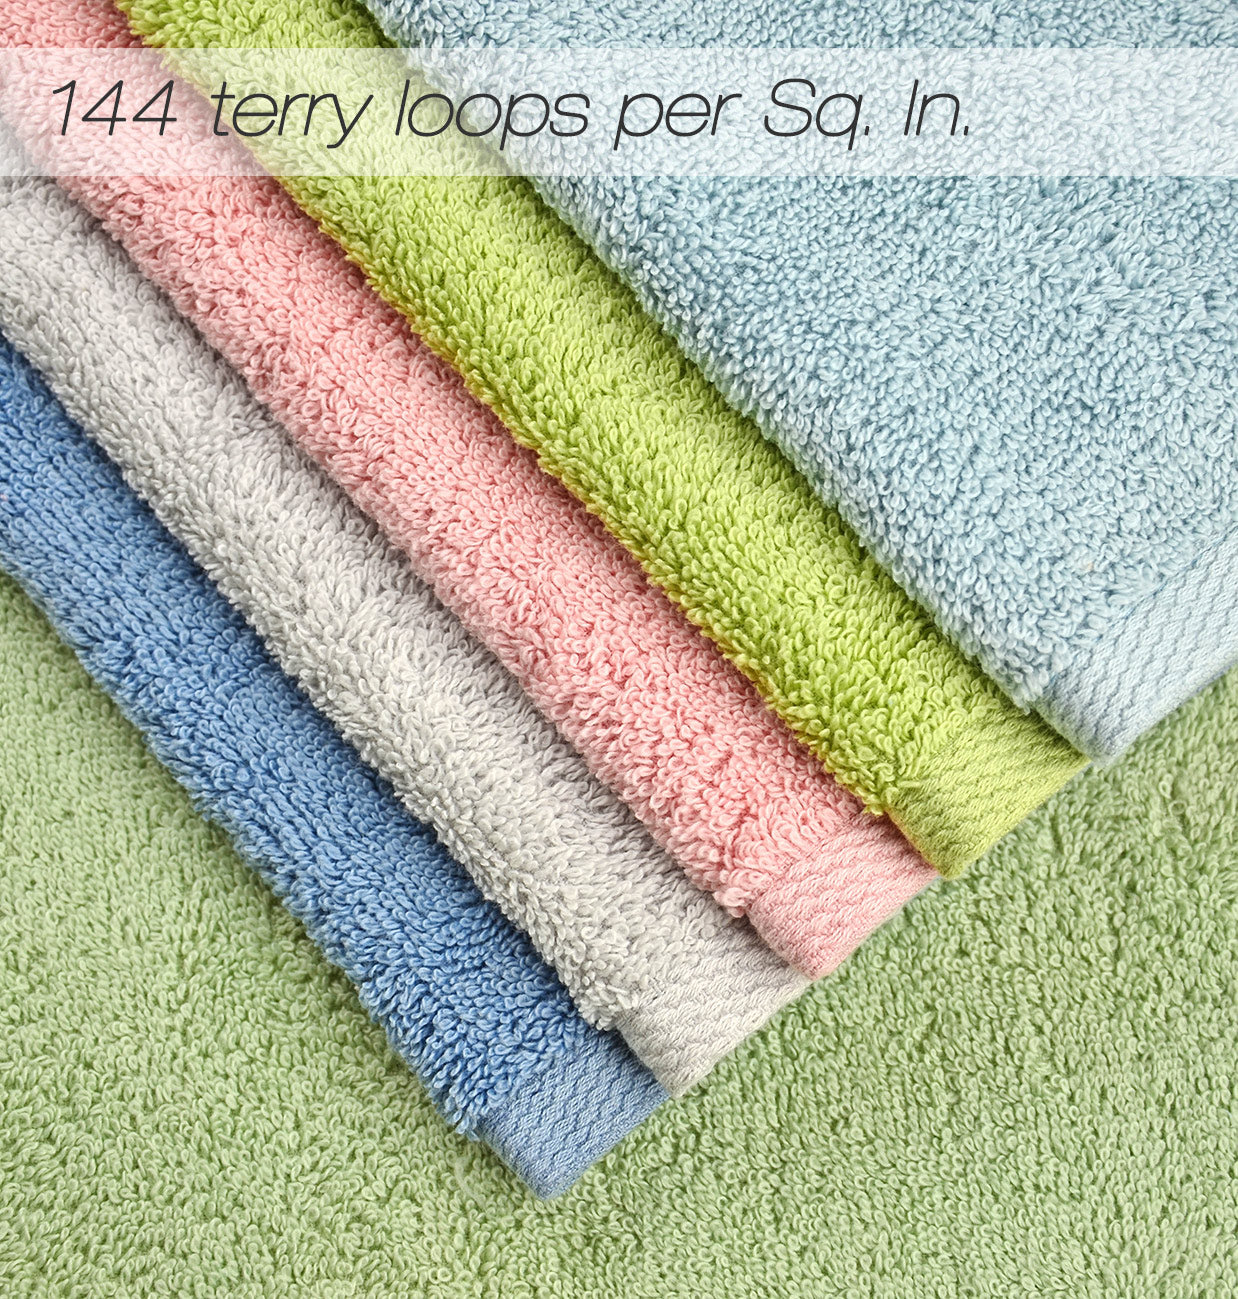 Cleanbear Bath Towels Cotton Shower Towels 55 x 27 1/2 Inches 2 Colors